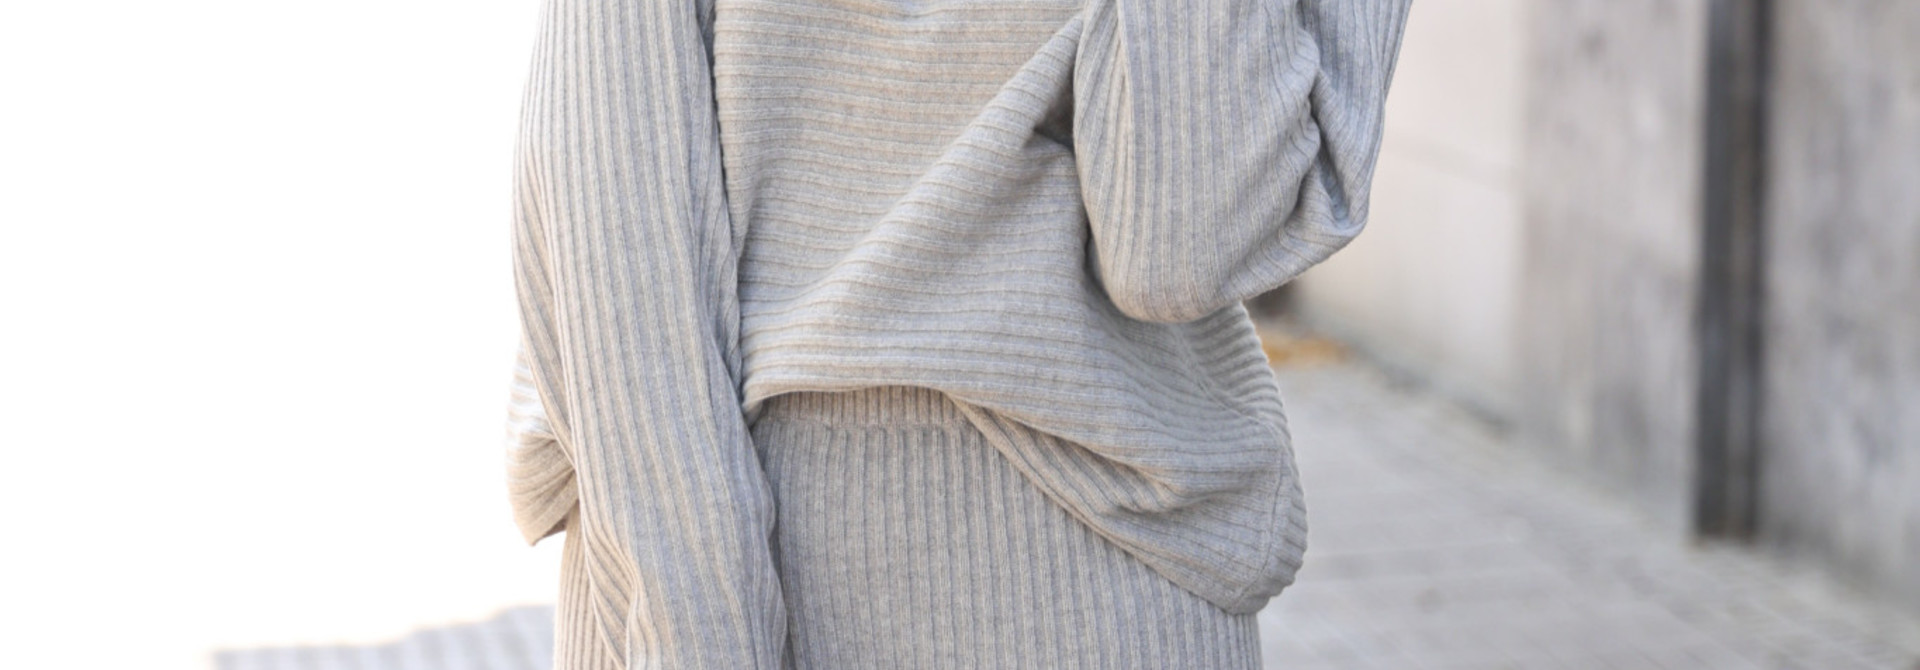 Canova sweater antonelli